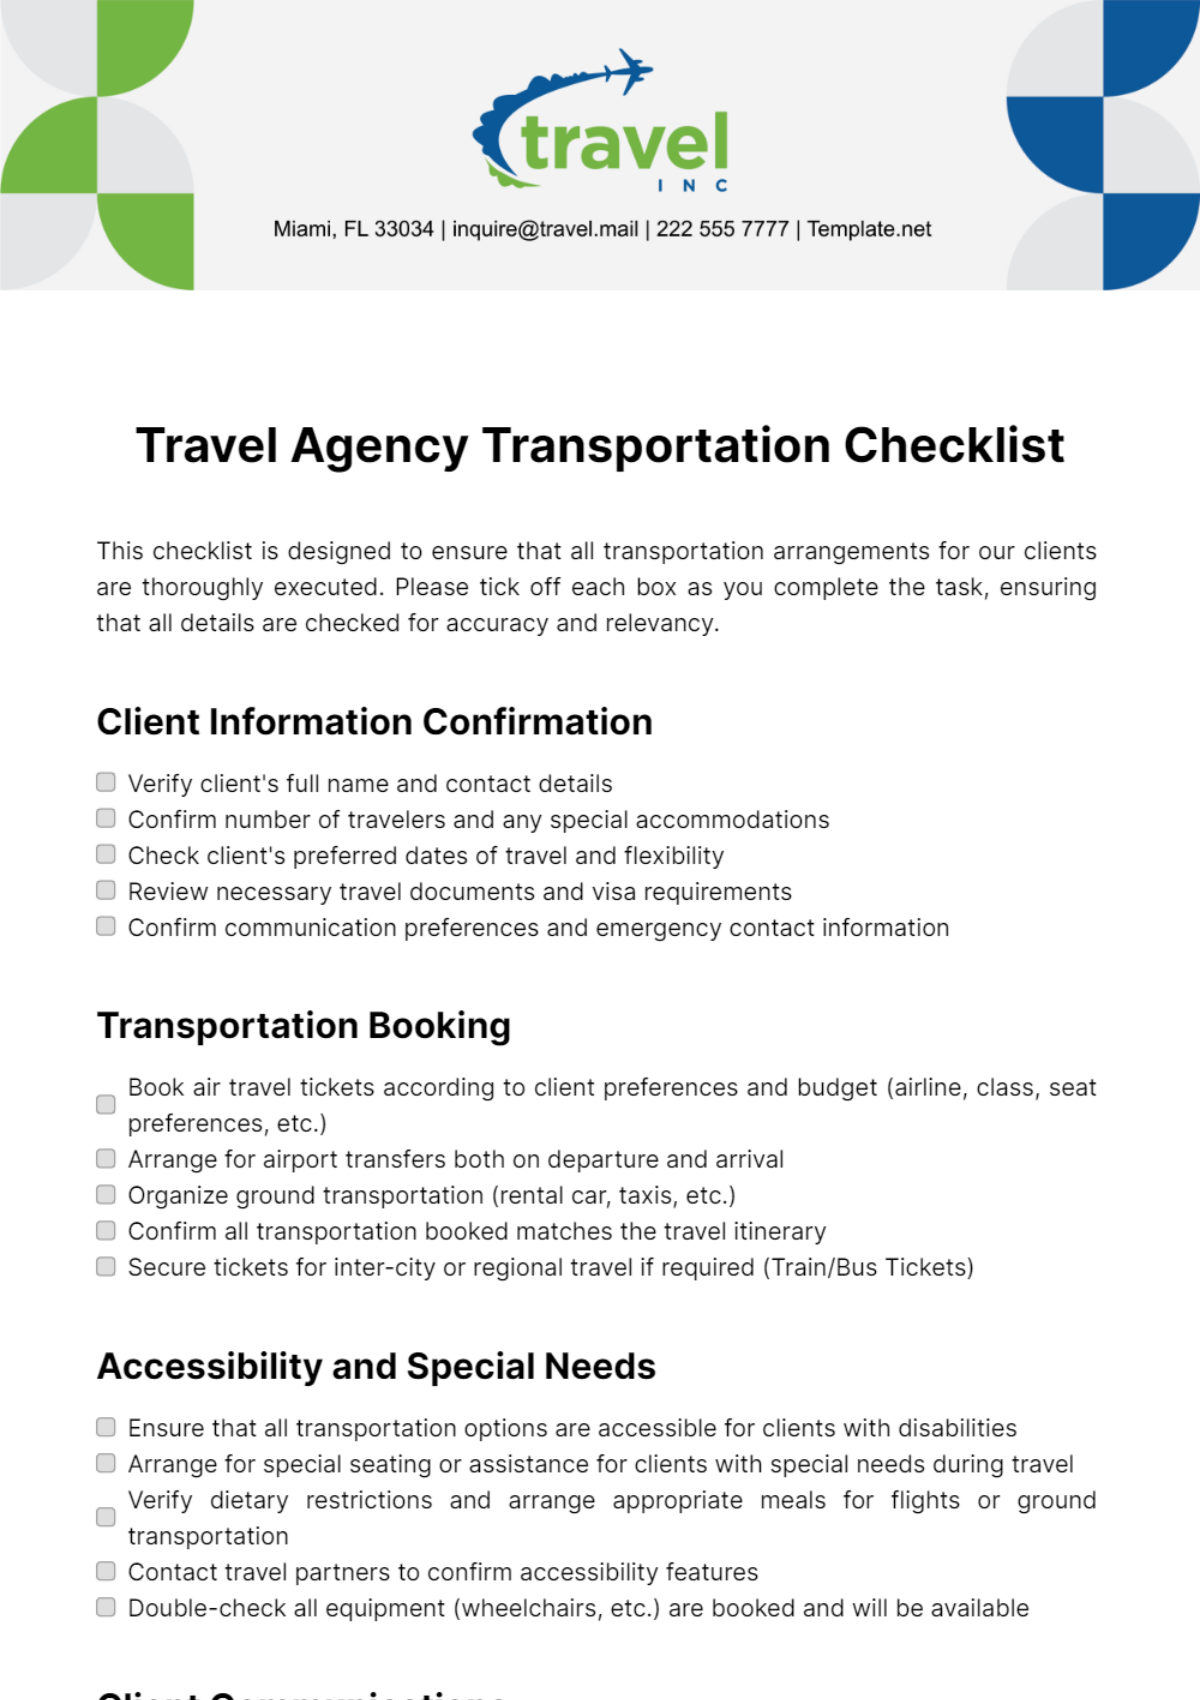 Free Travel Agency Transportation Checklist Template